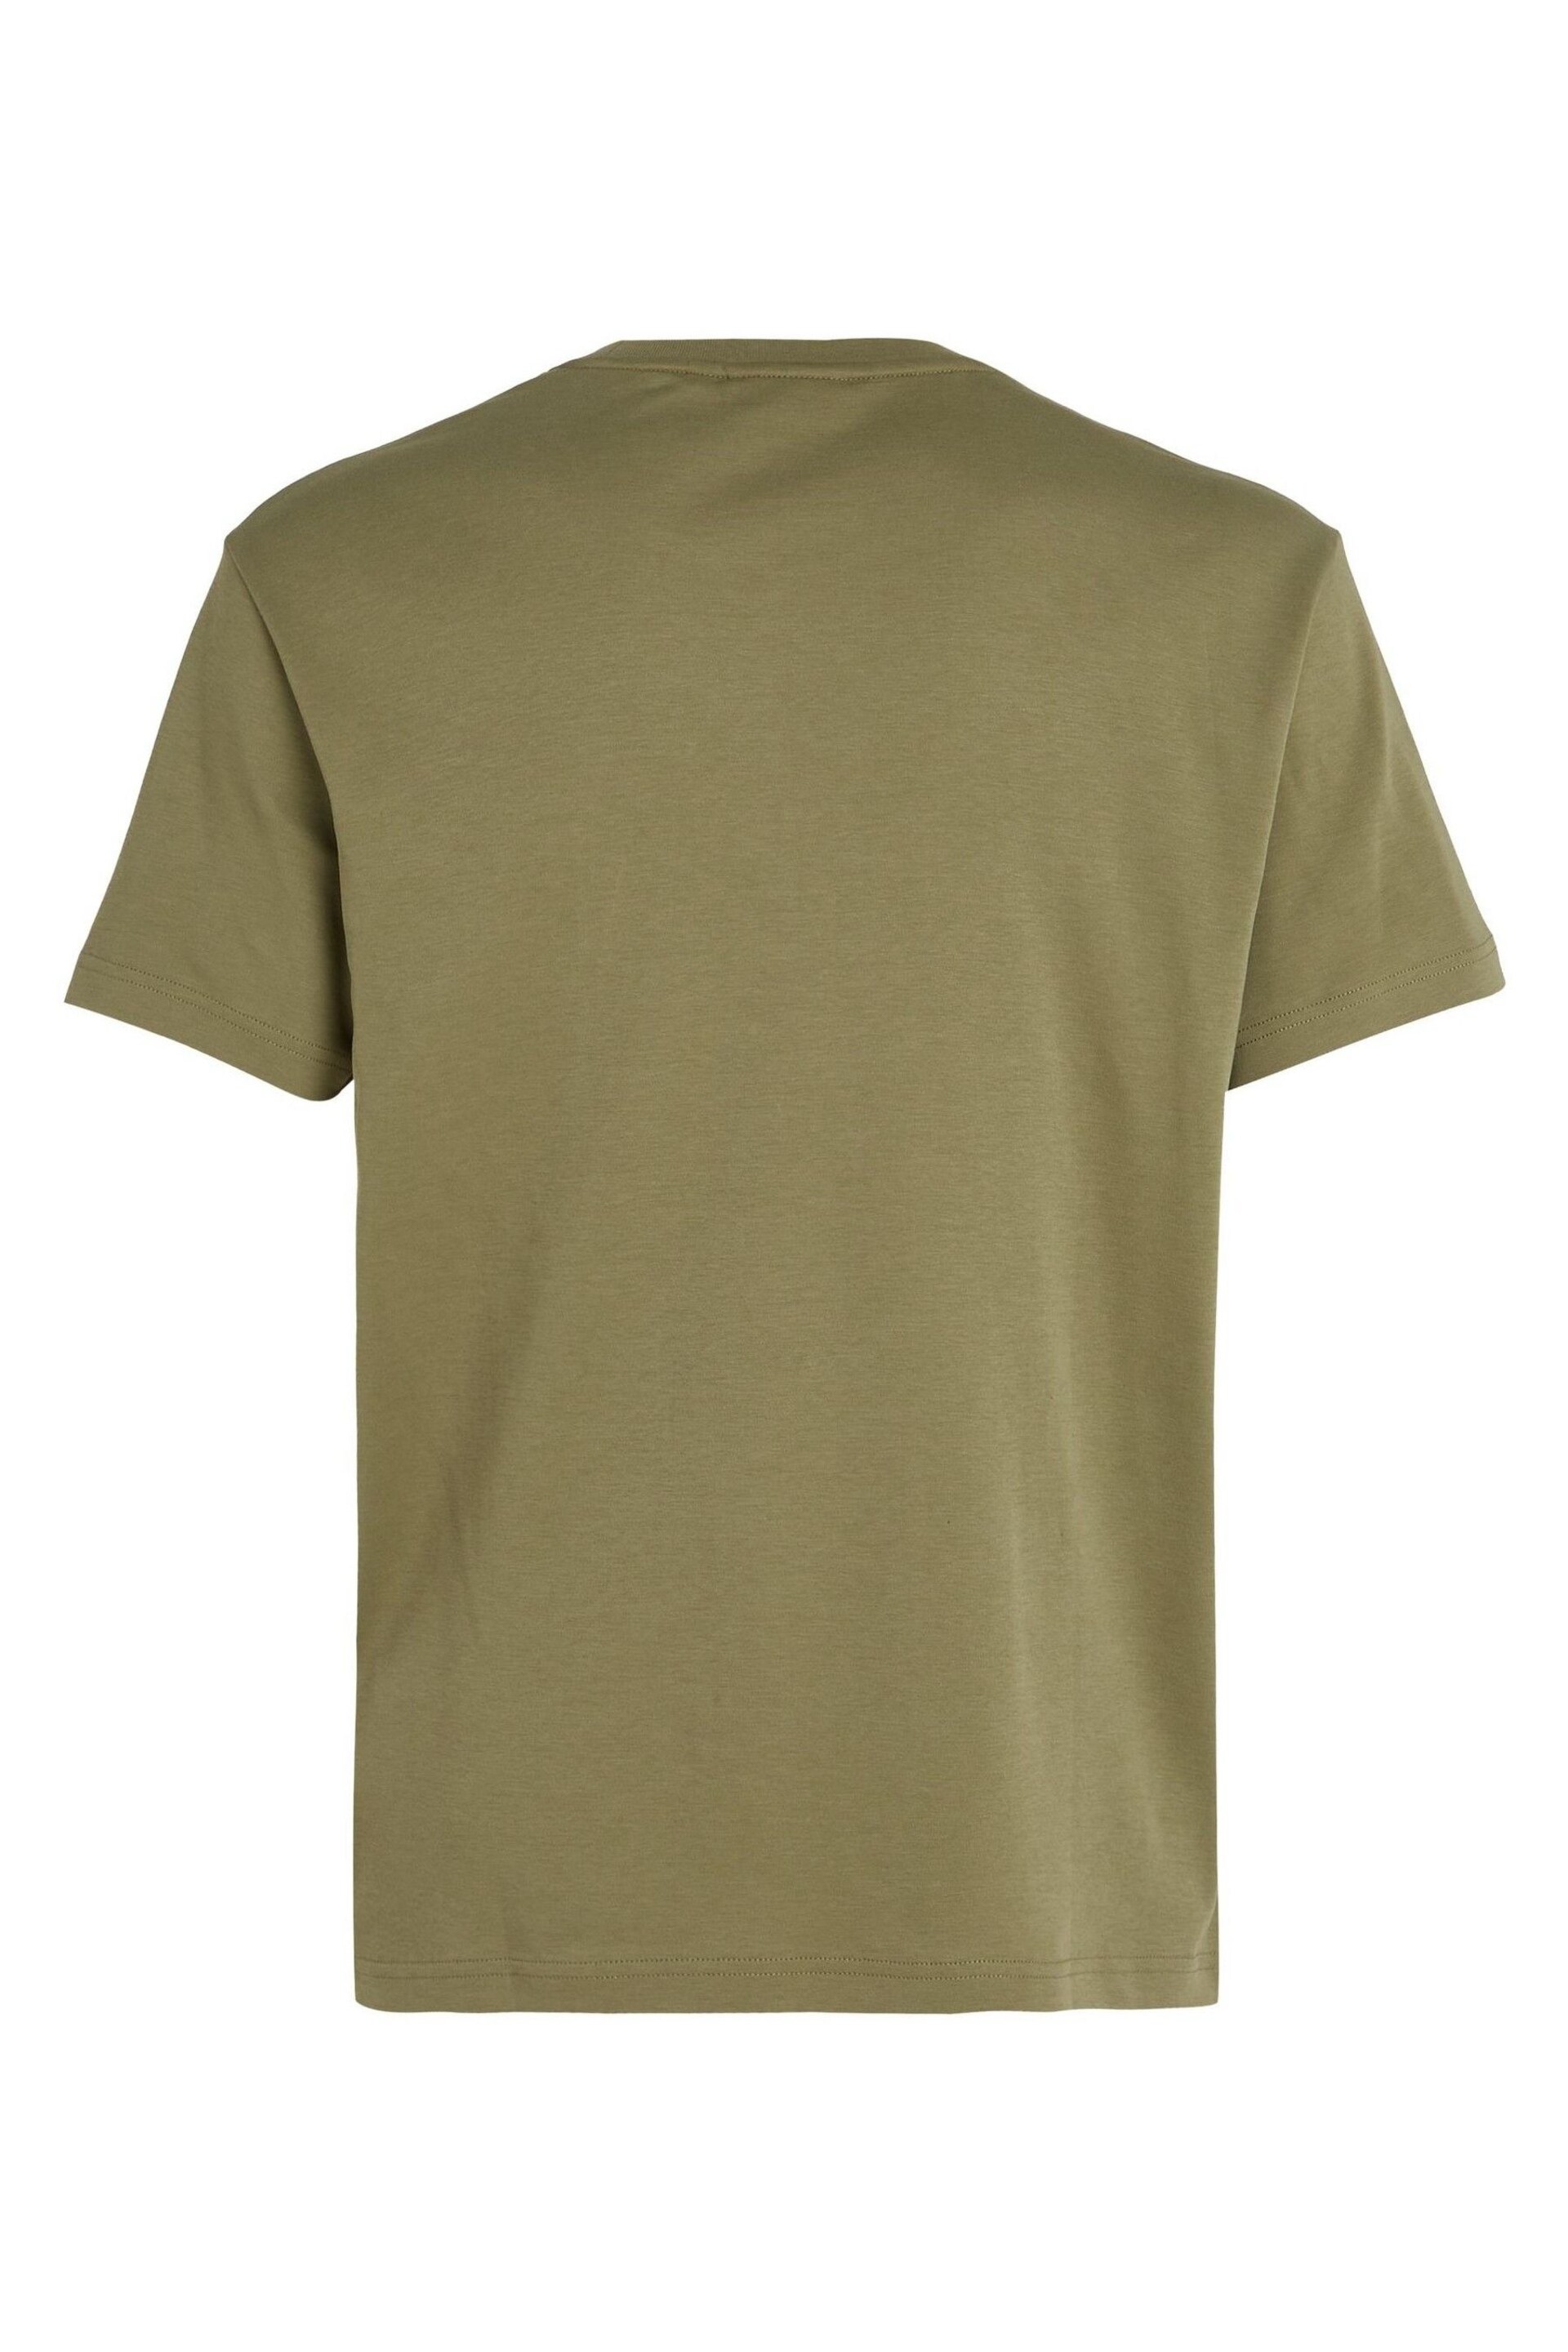 Calvin Klein Green Logo Interlock T-Shirt - Image 5 of 5